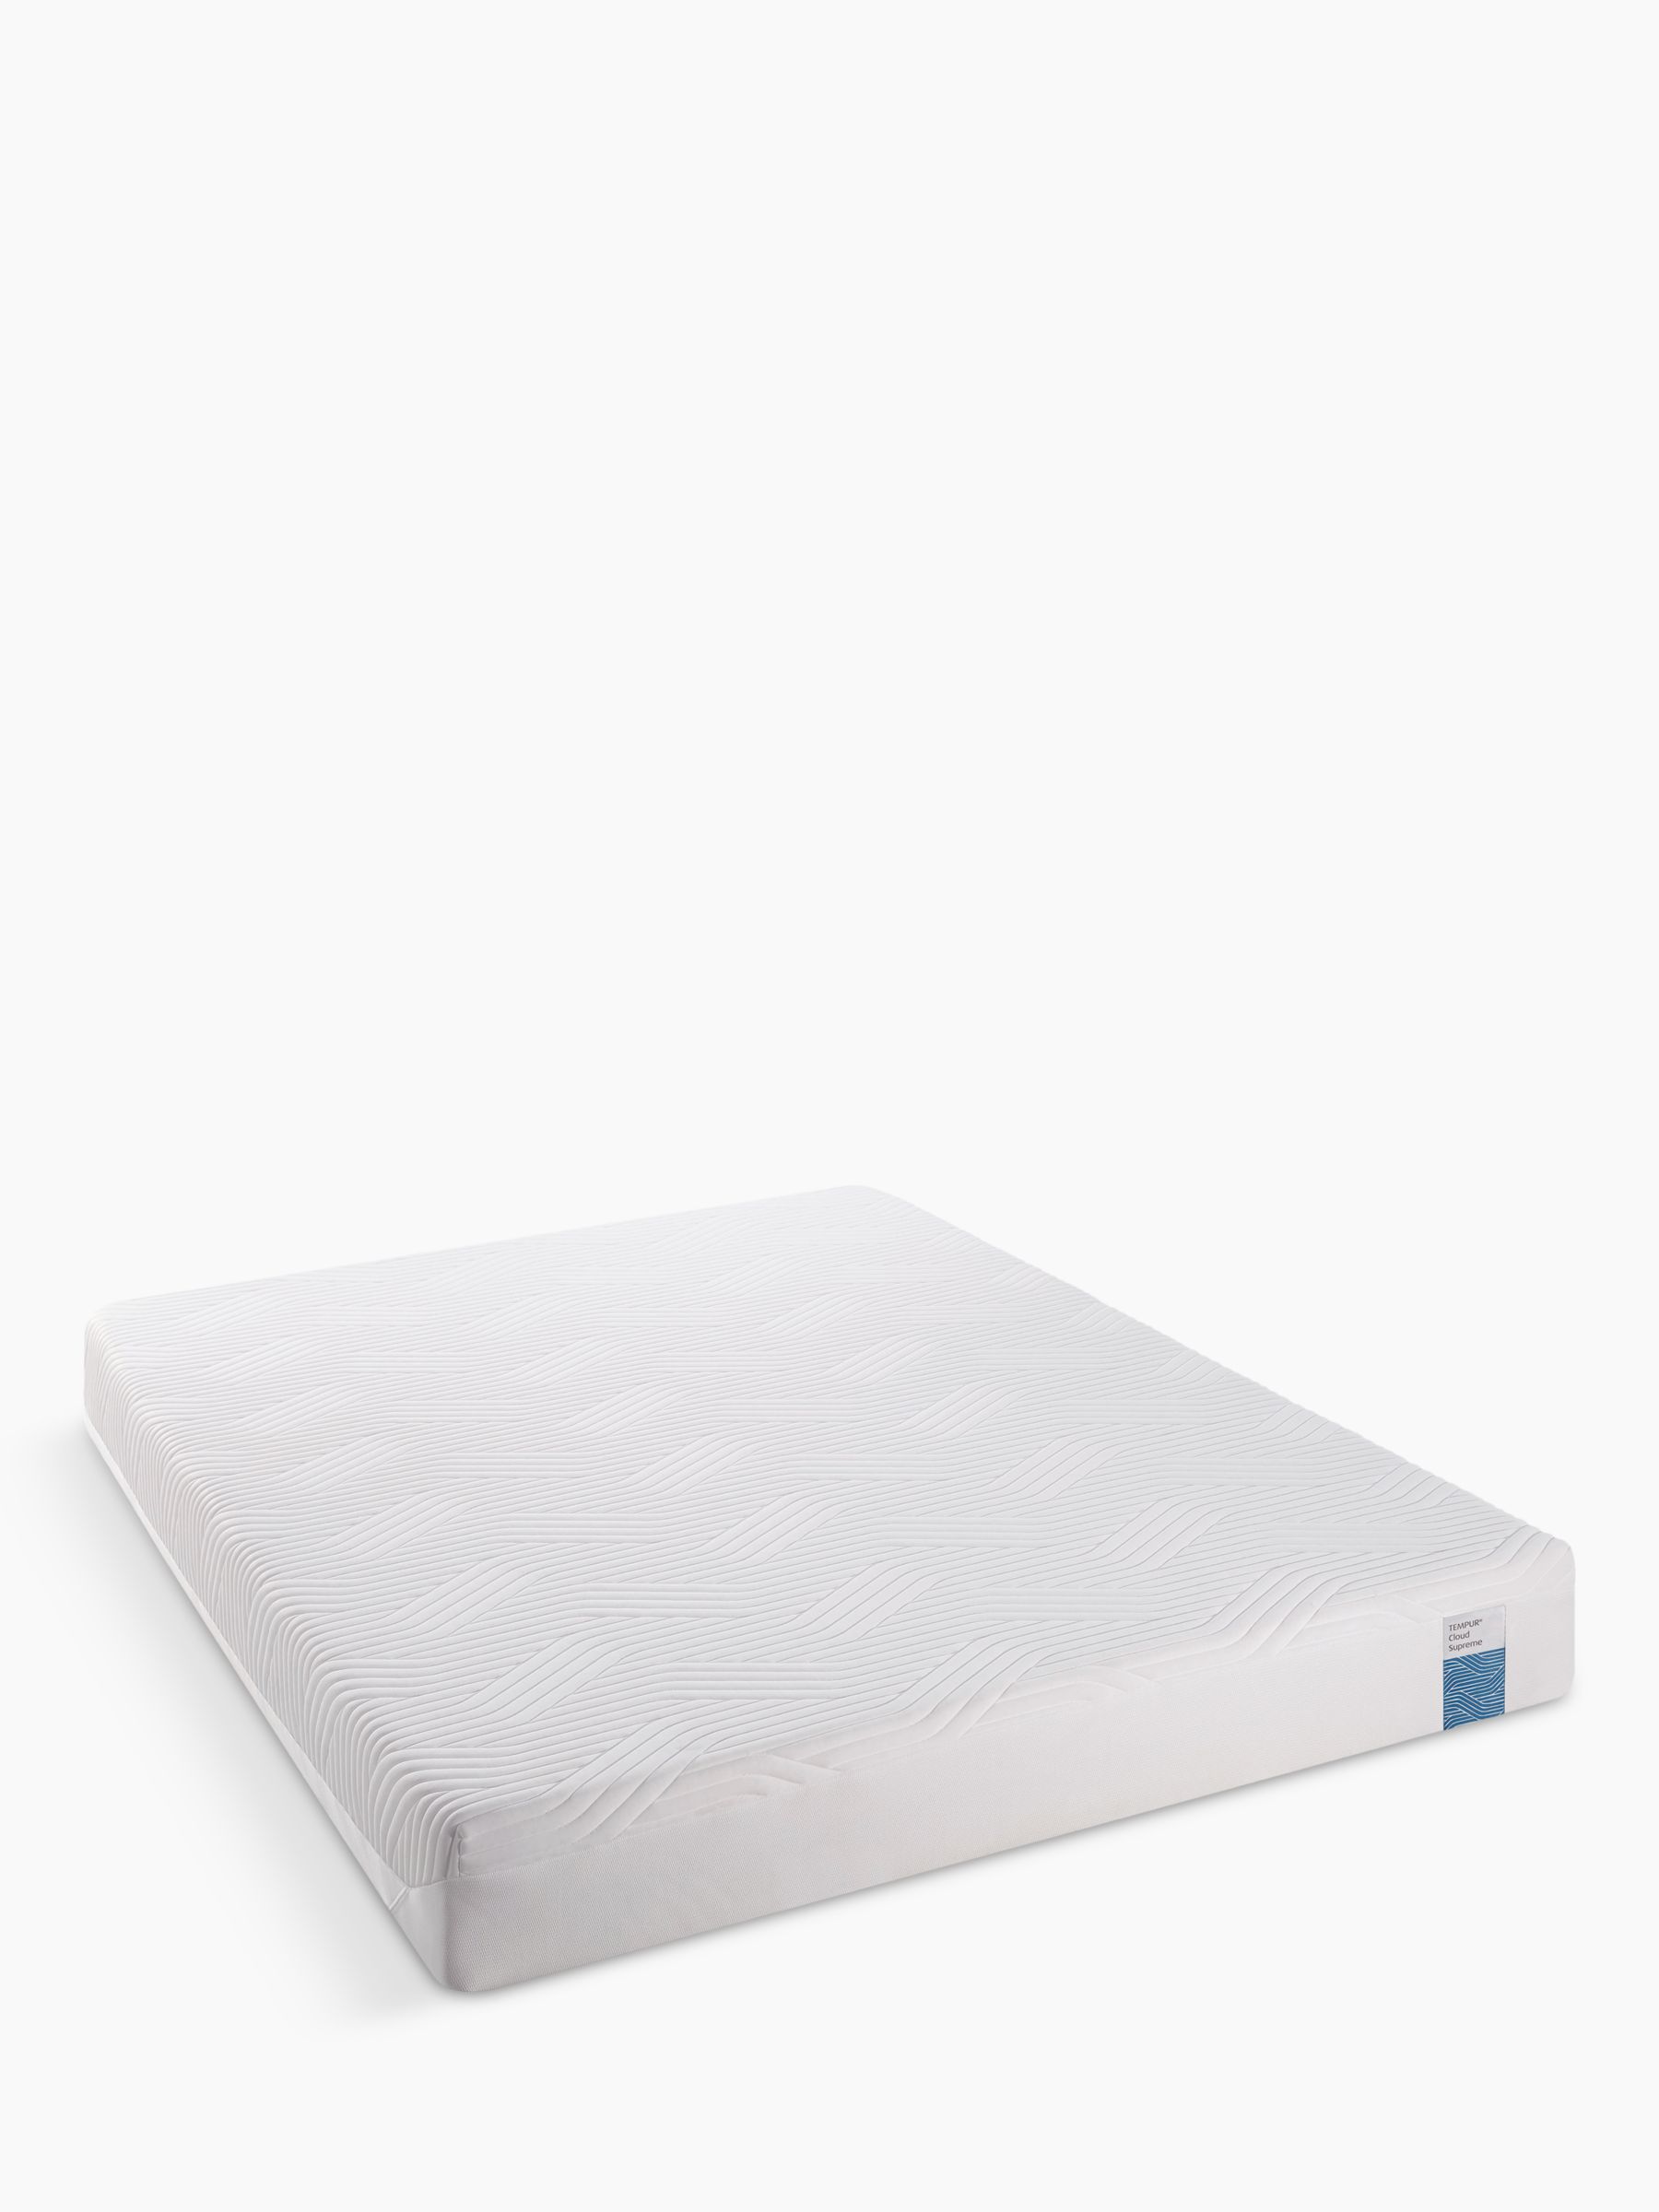 Photo of Tempur® cloud supreme memory foam mattress soft super king size